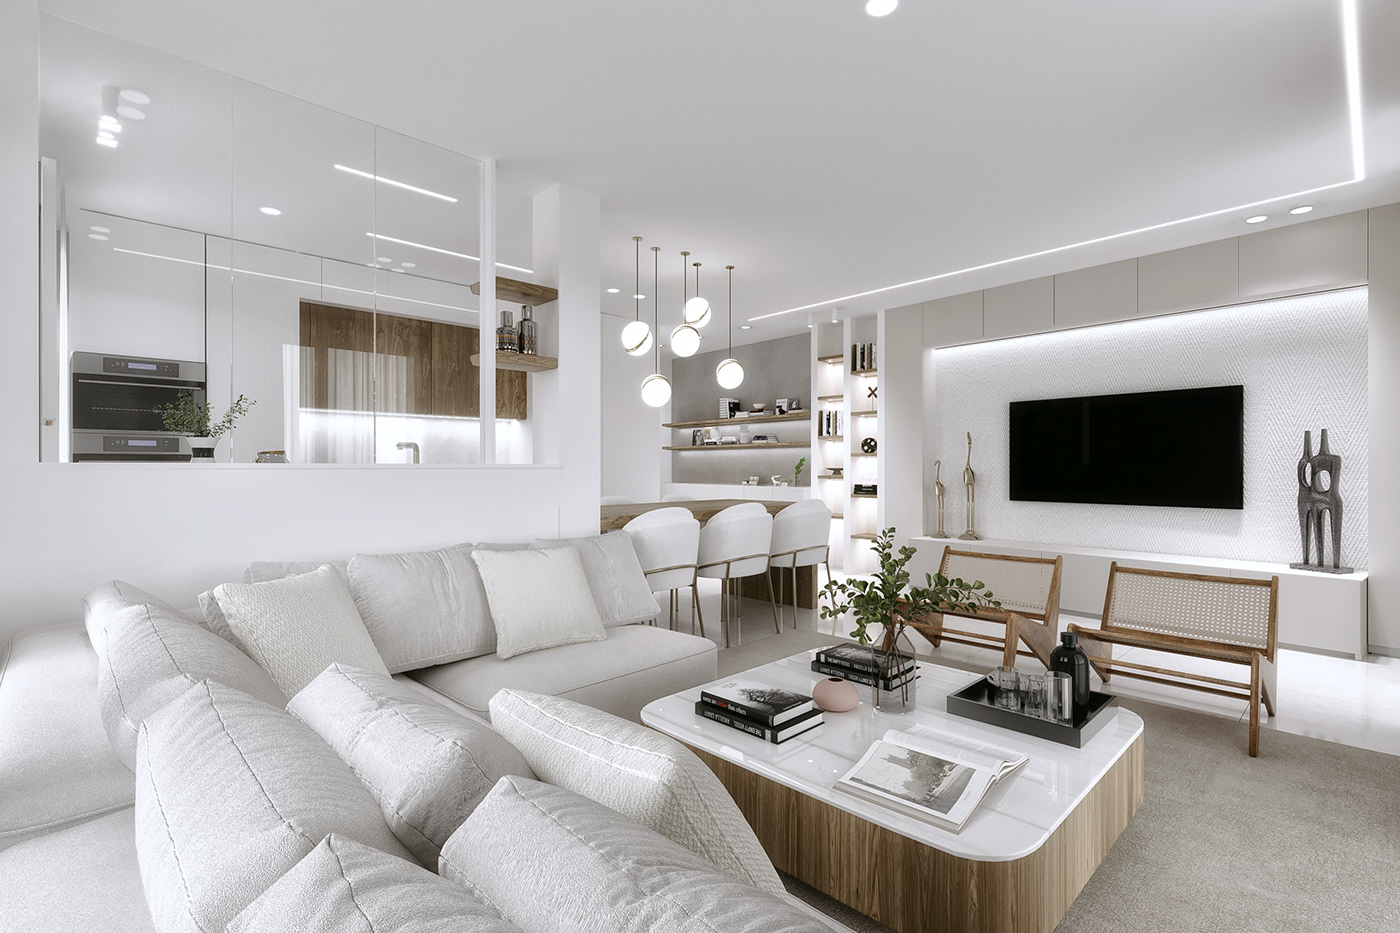 3D 3ds max archviz CGI design interior design  kitchen living room Render visualization